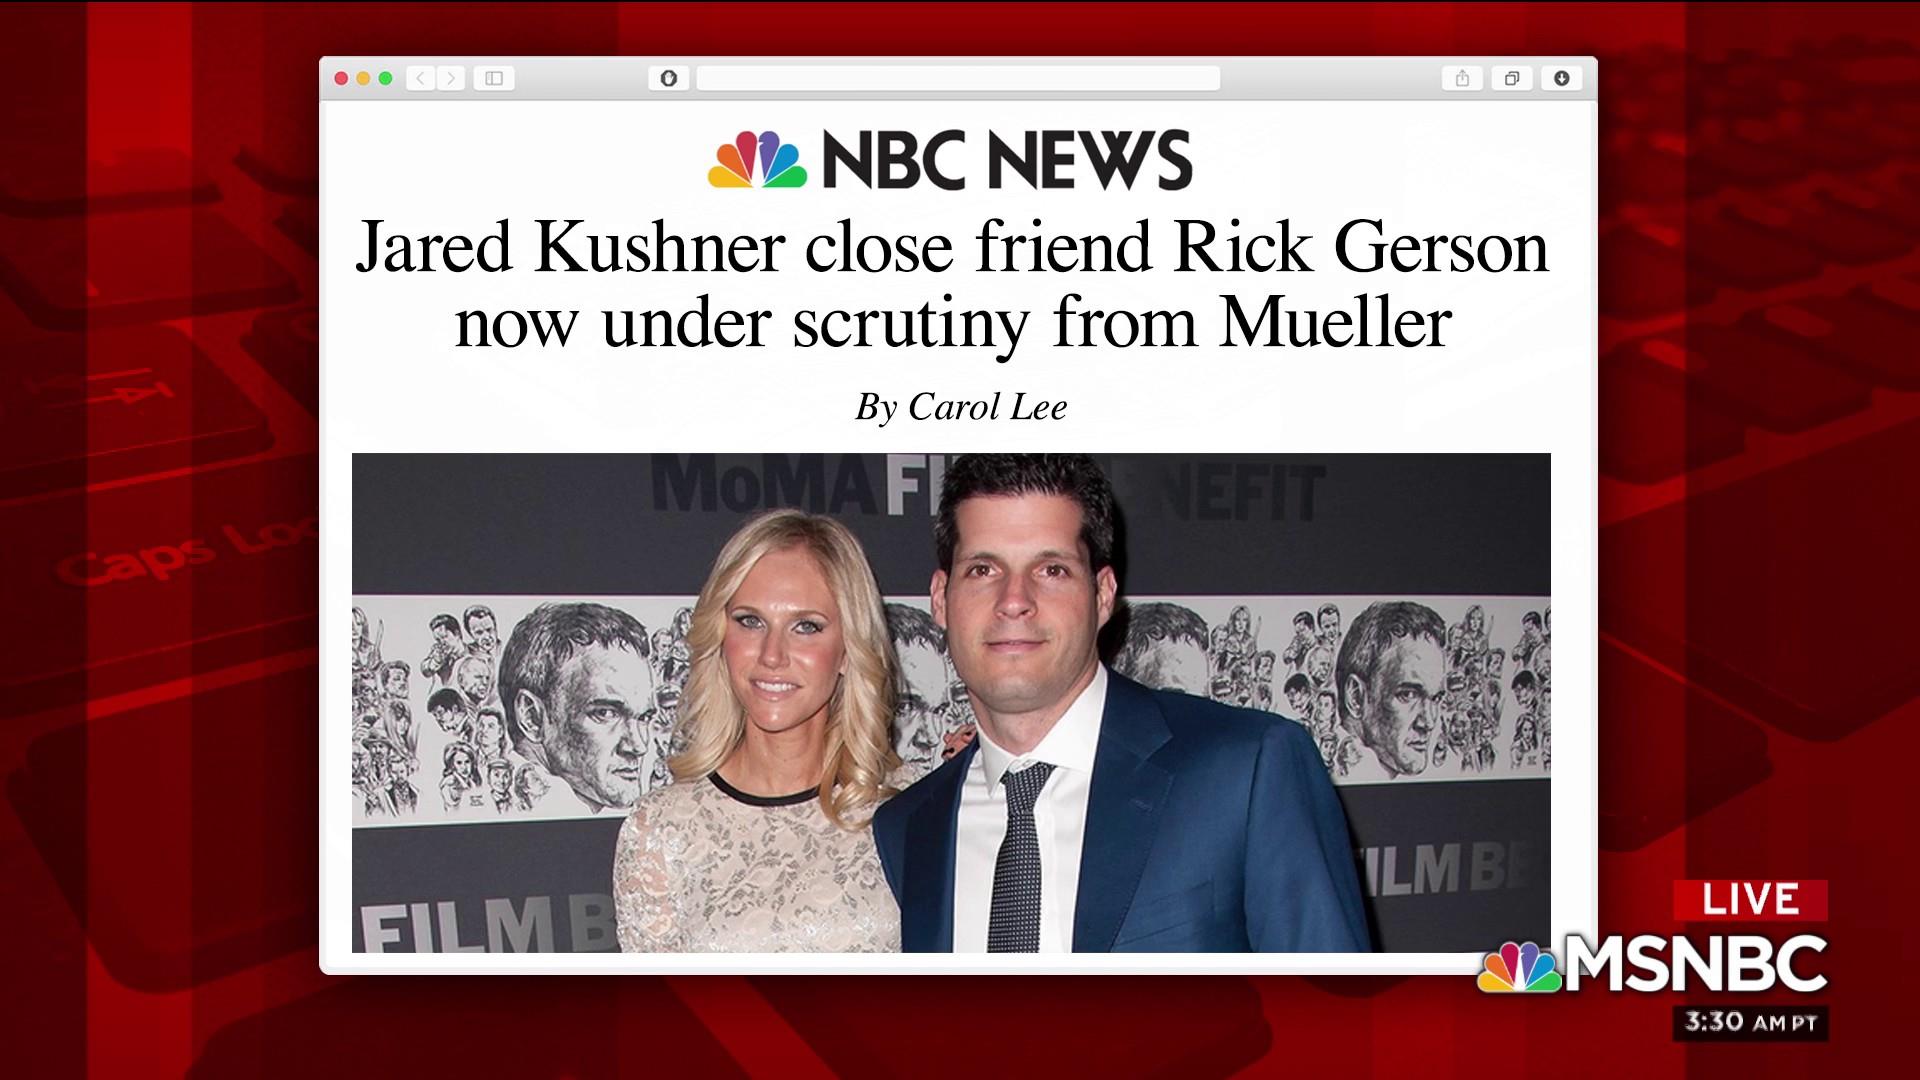 Jared Kushner close friend Rick Gerson now under scrutiny from Mueller